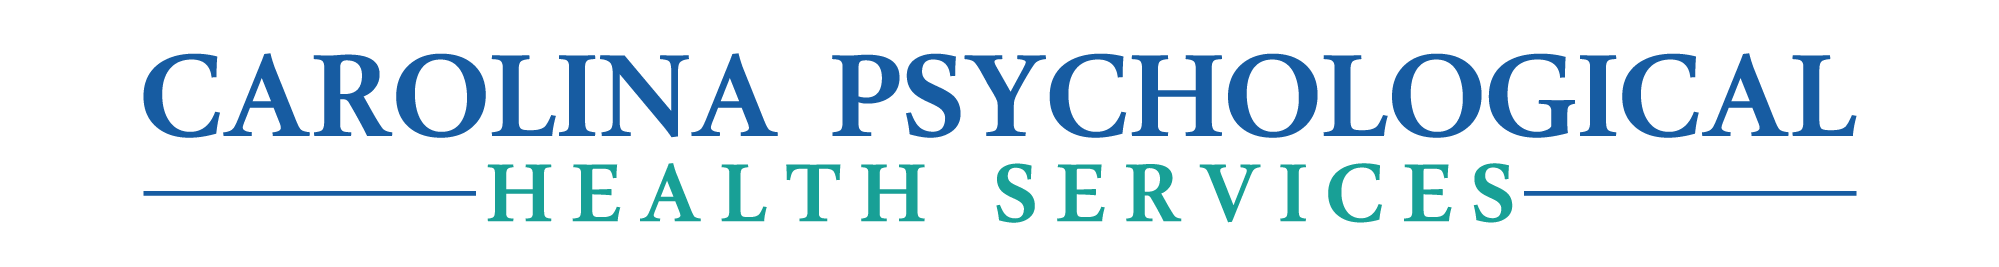 Carolina Psychological Health Services